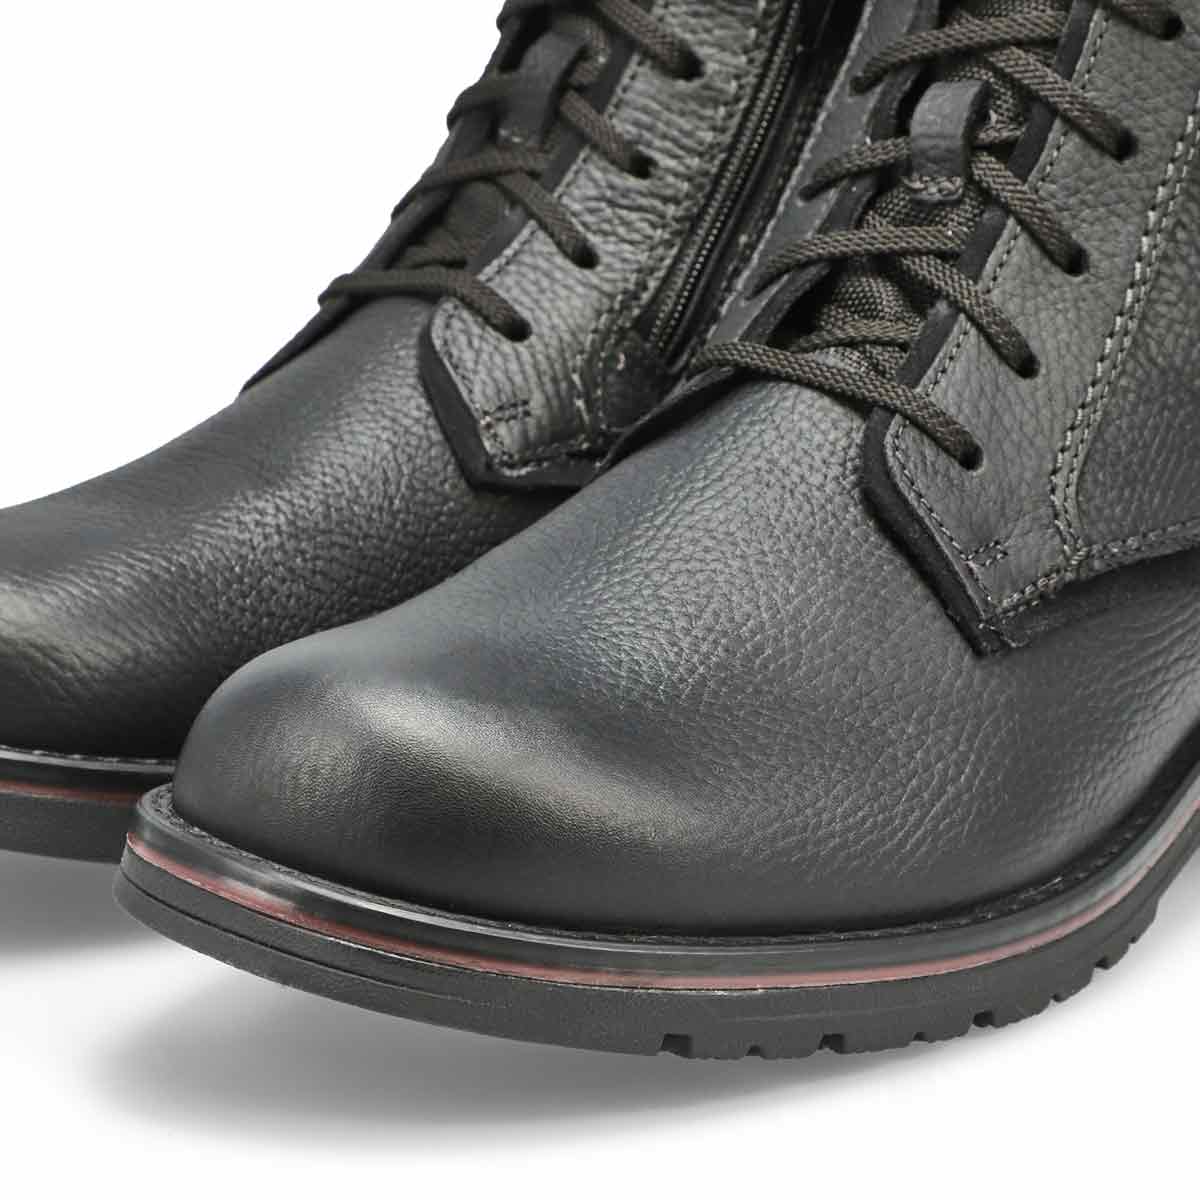 Men's Morris High Waterproof Wide Boot - Black